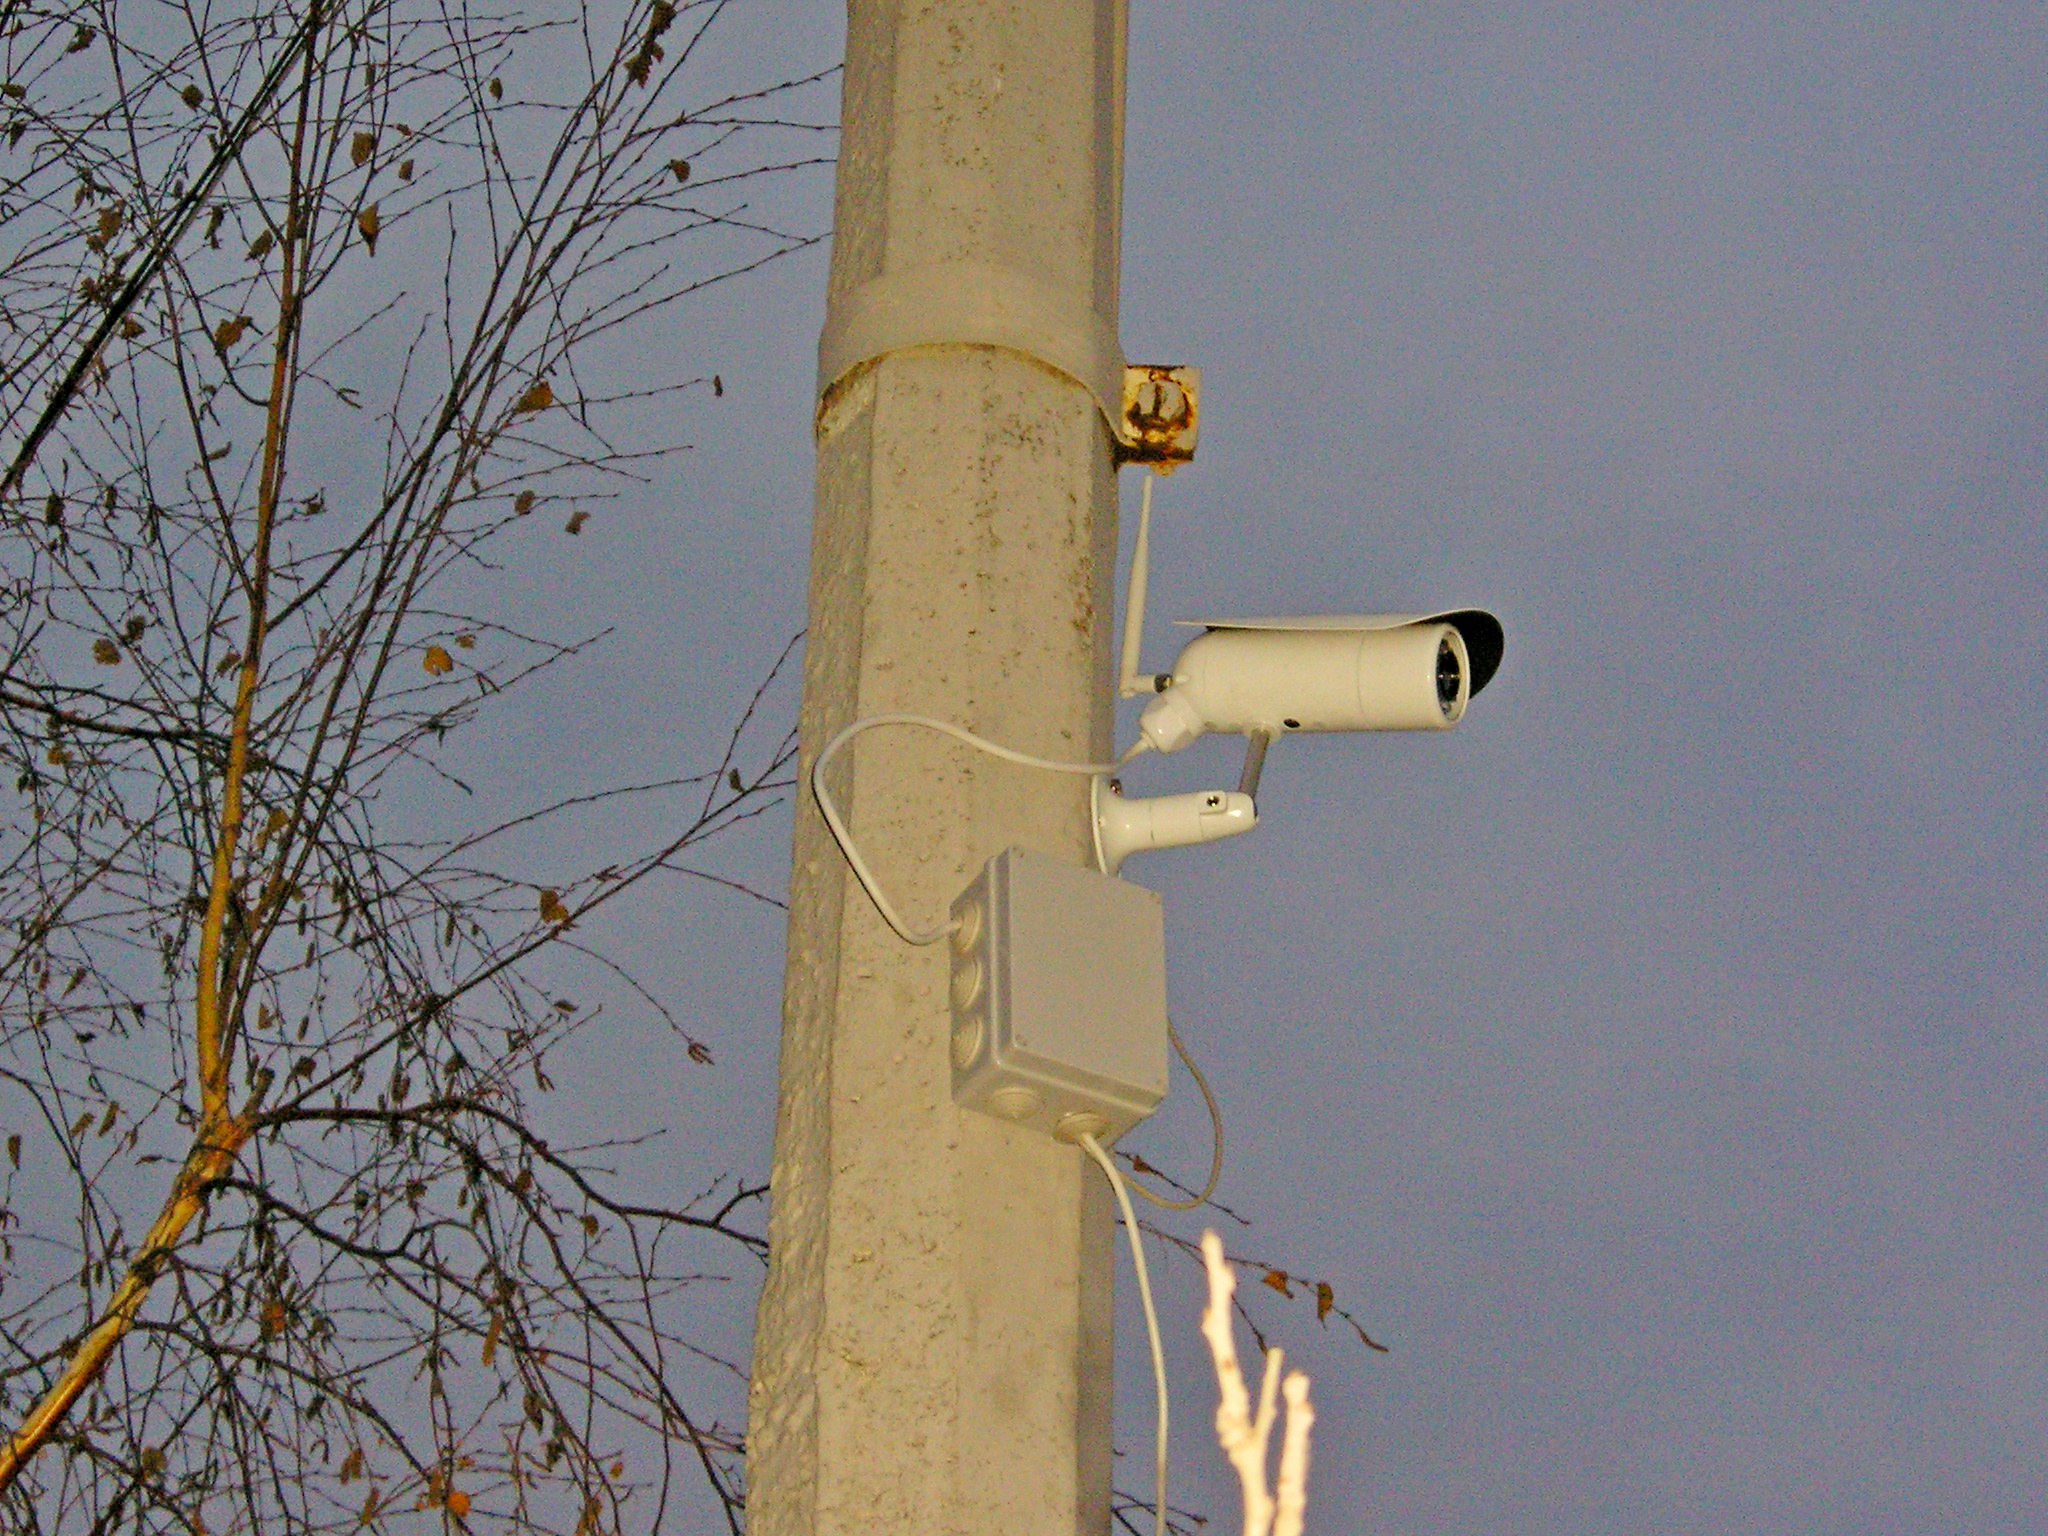 монтаж камеры на столбе, установка камеры Линк-326 на улице